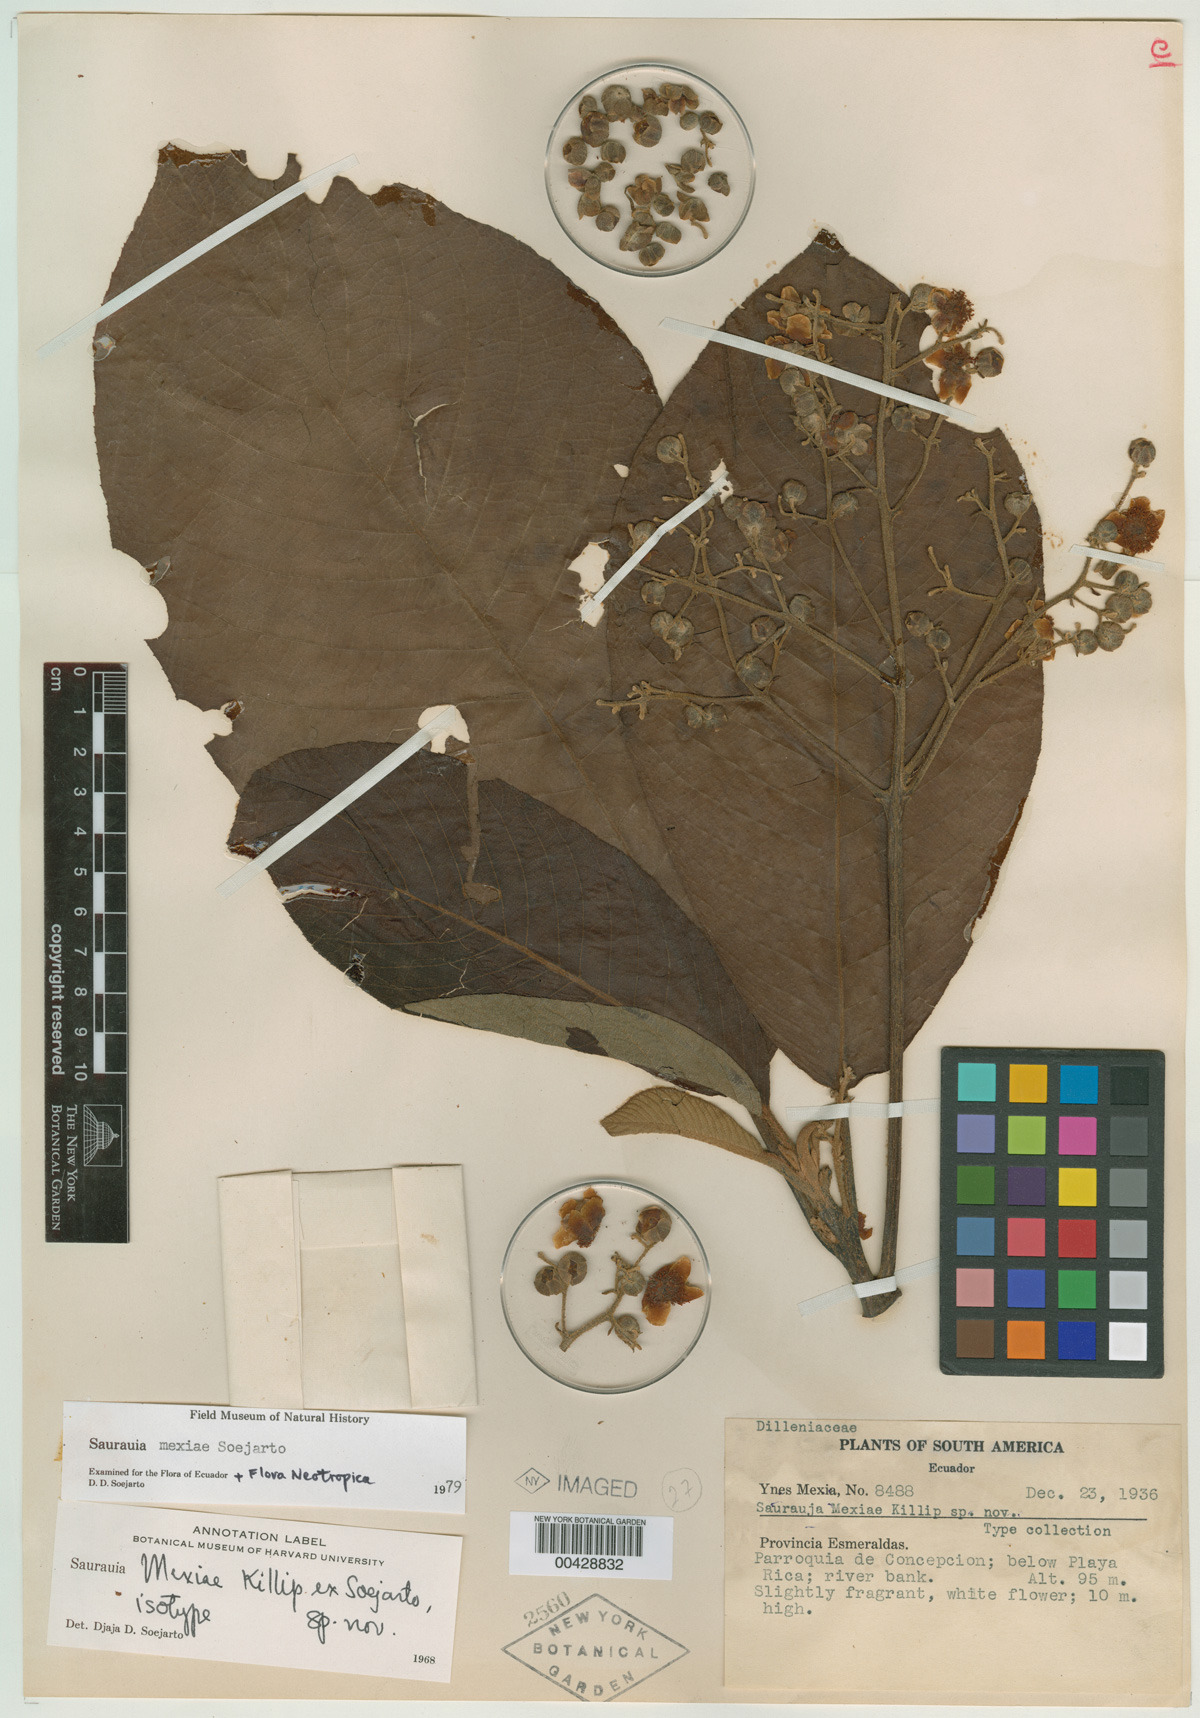 Sauraula Mexiae, Steere Herbarium - NY Botanical Graden